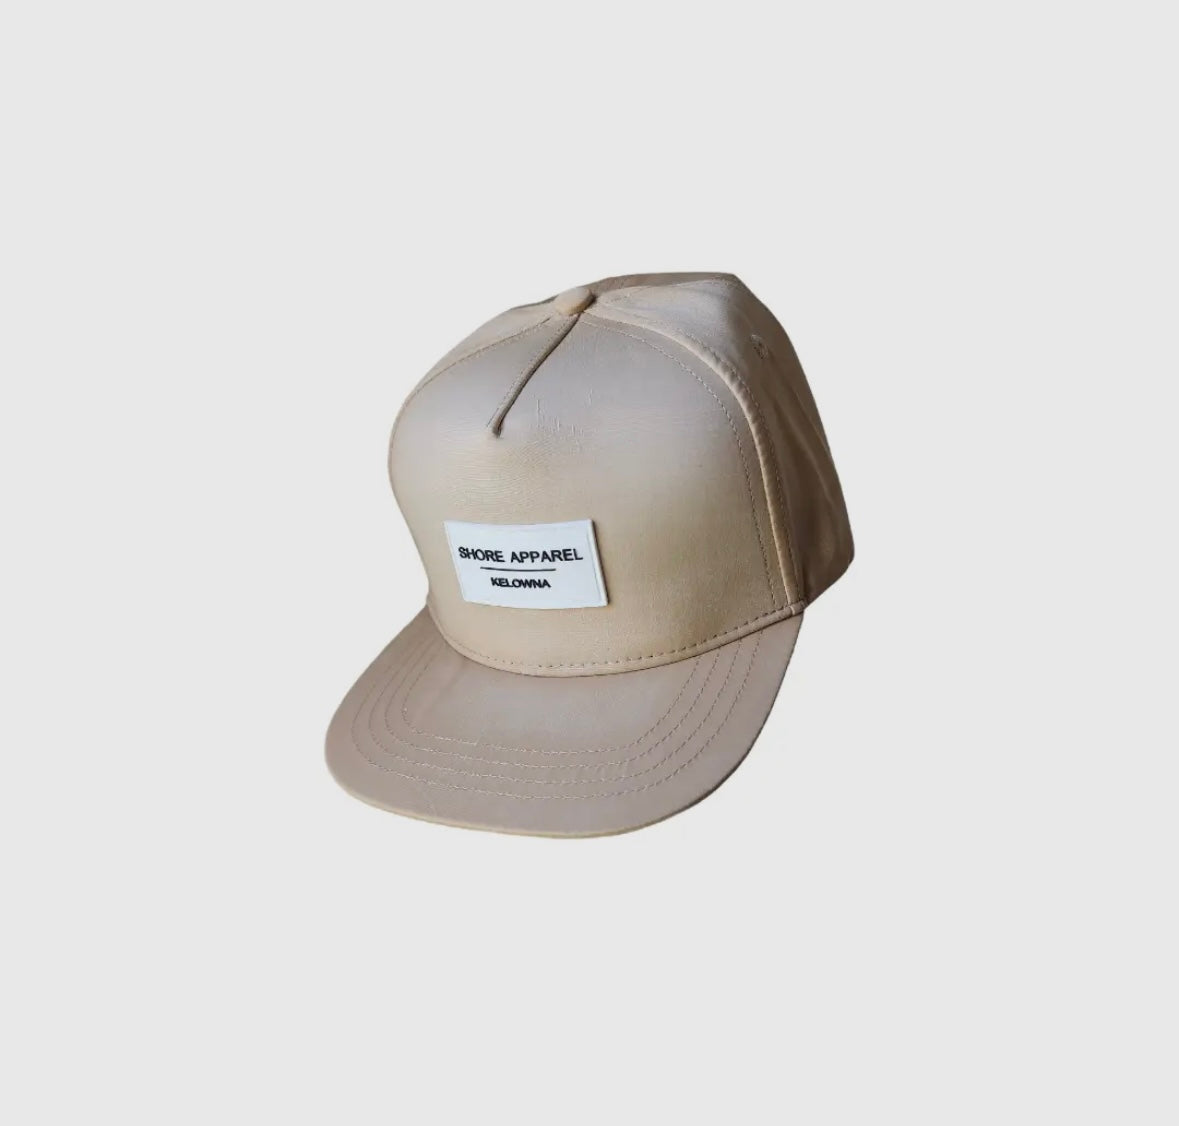 Shore apparel sandbar hat (kid and adult)